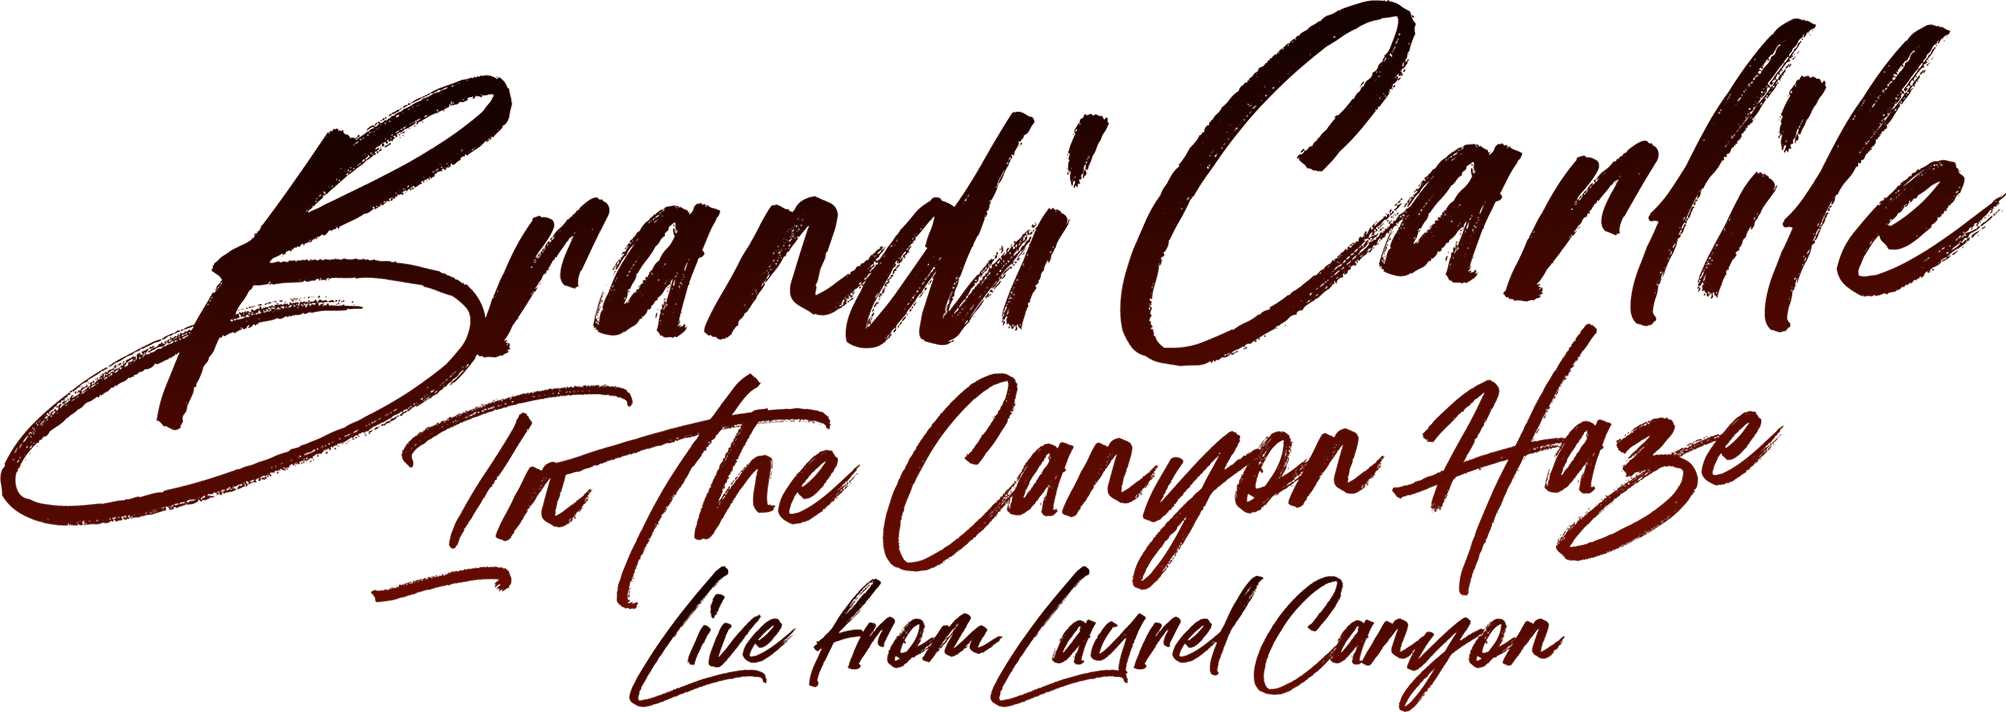 Brandi Carlile: In the Canyon Haze – Live from Laurel Canyon logo